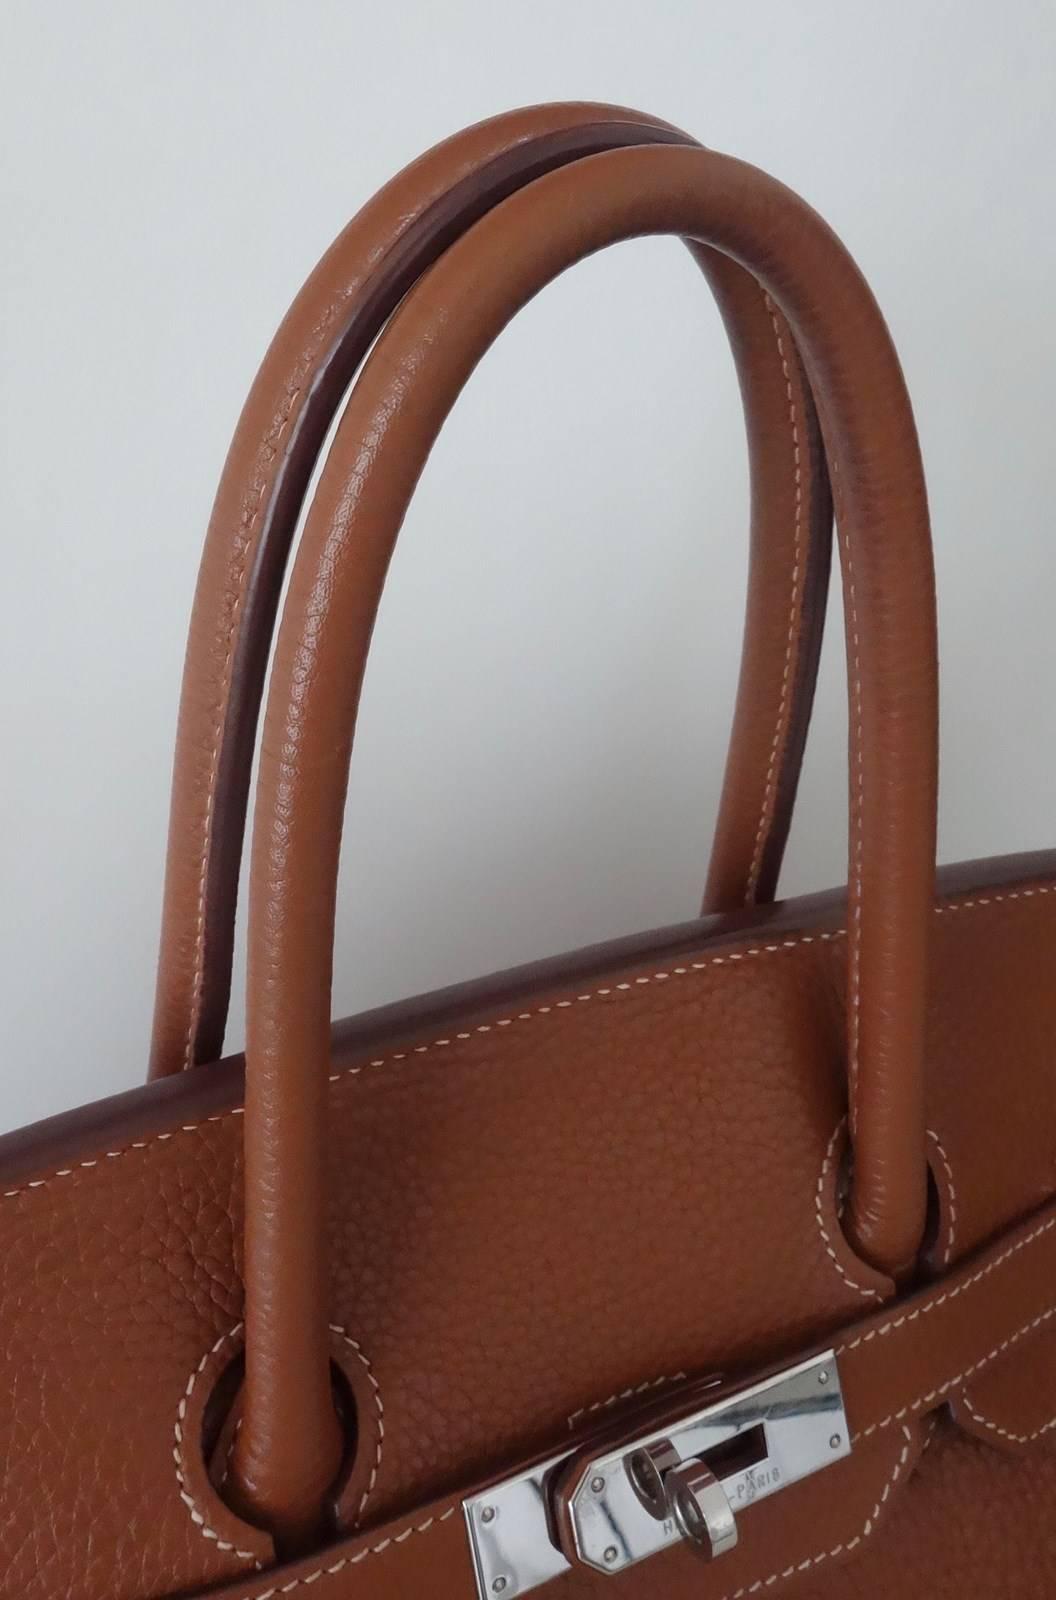 Hermes Birkin Handbag Gold Taurillon Clemence Leather PHW 35 cm 2